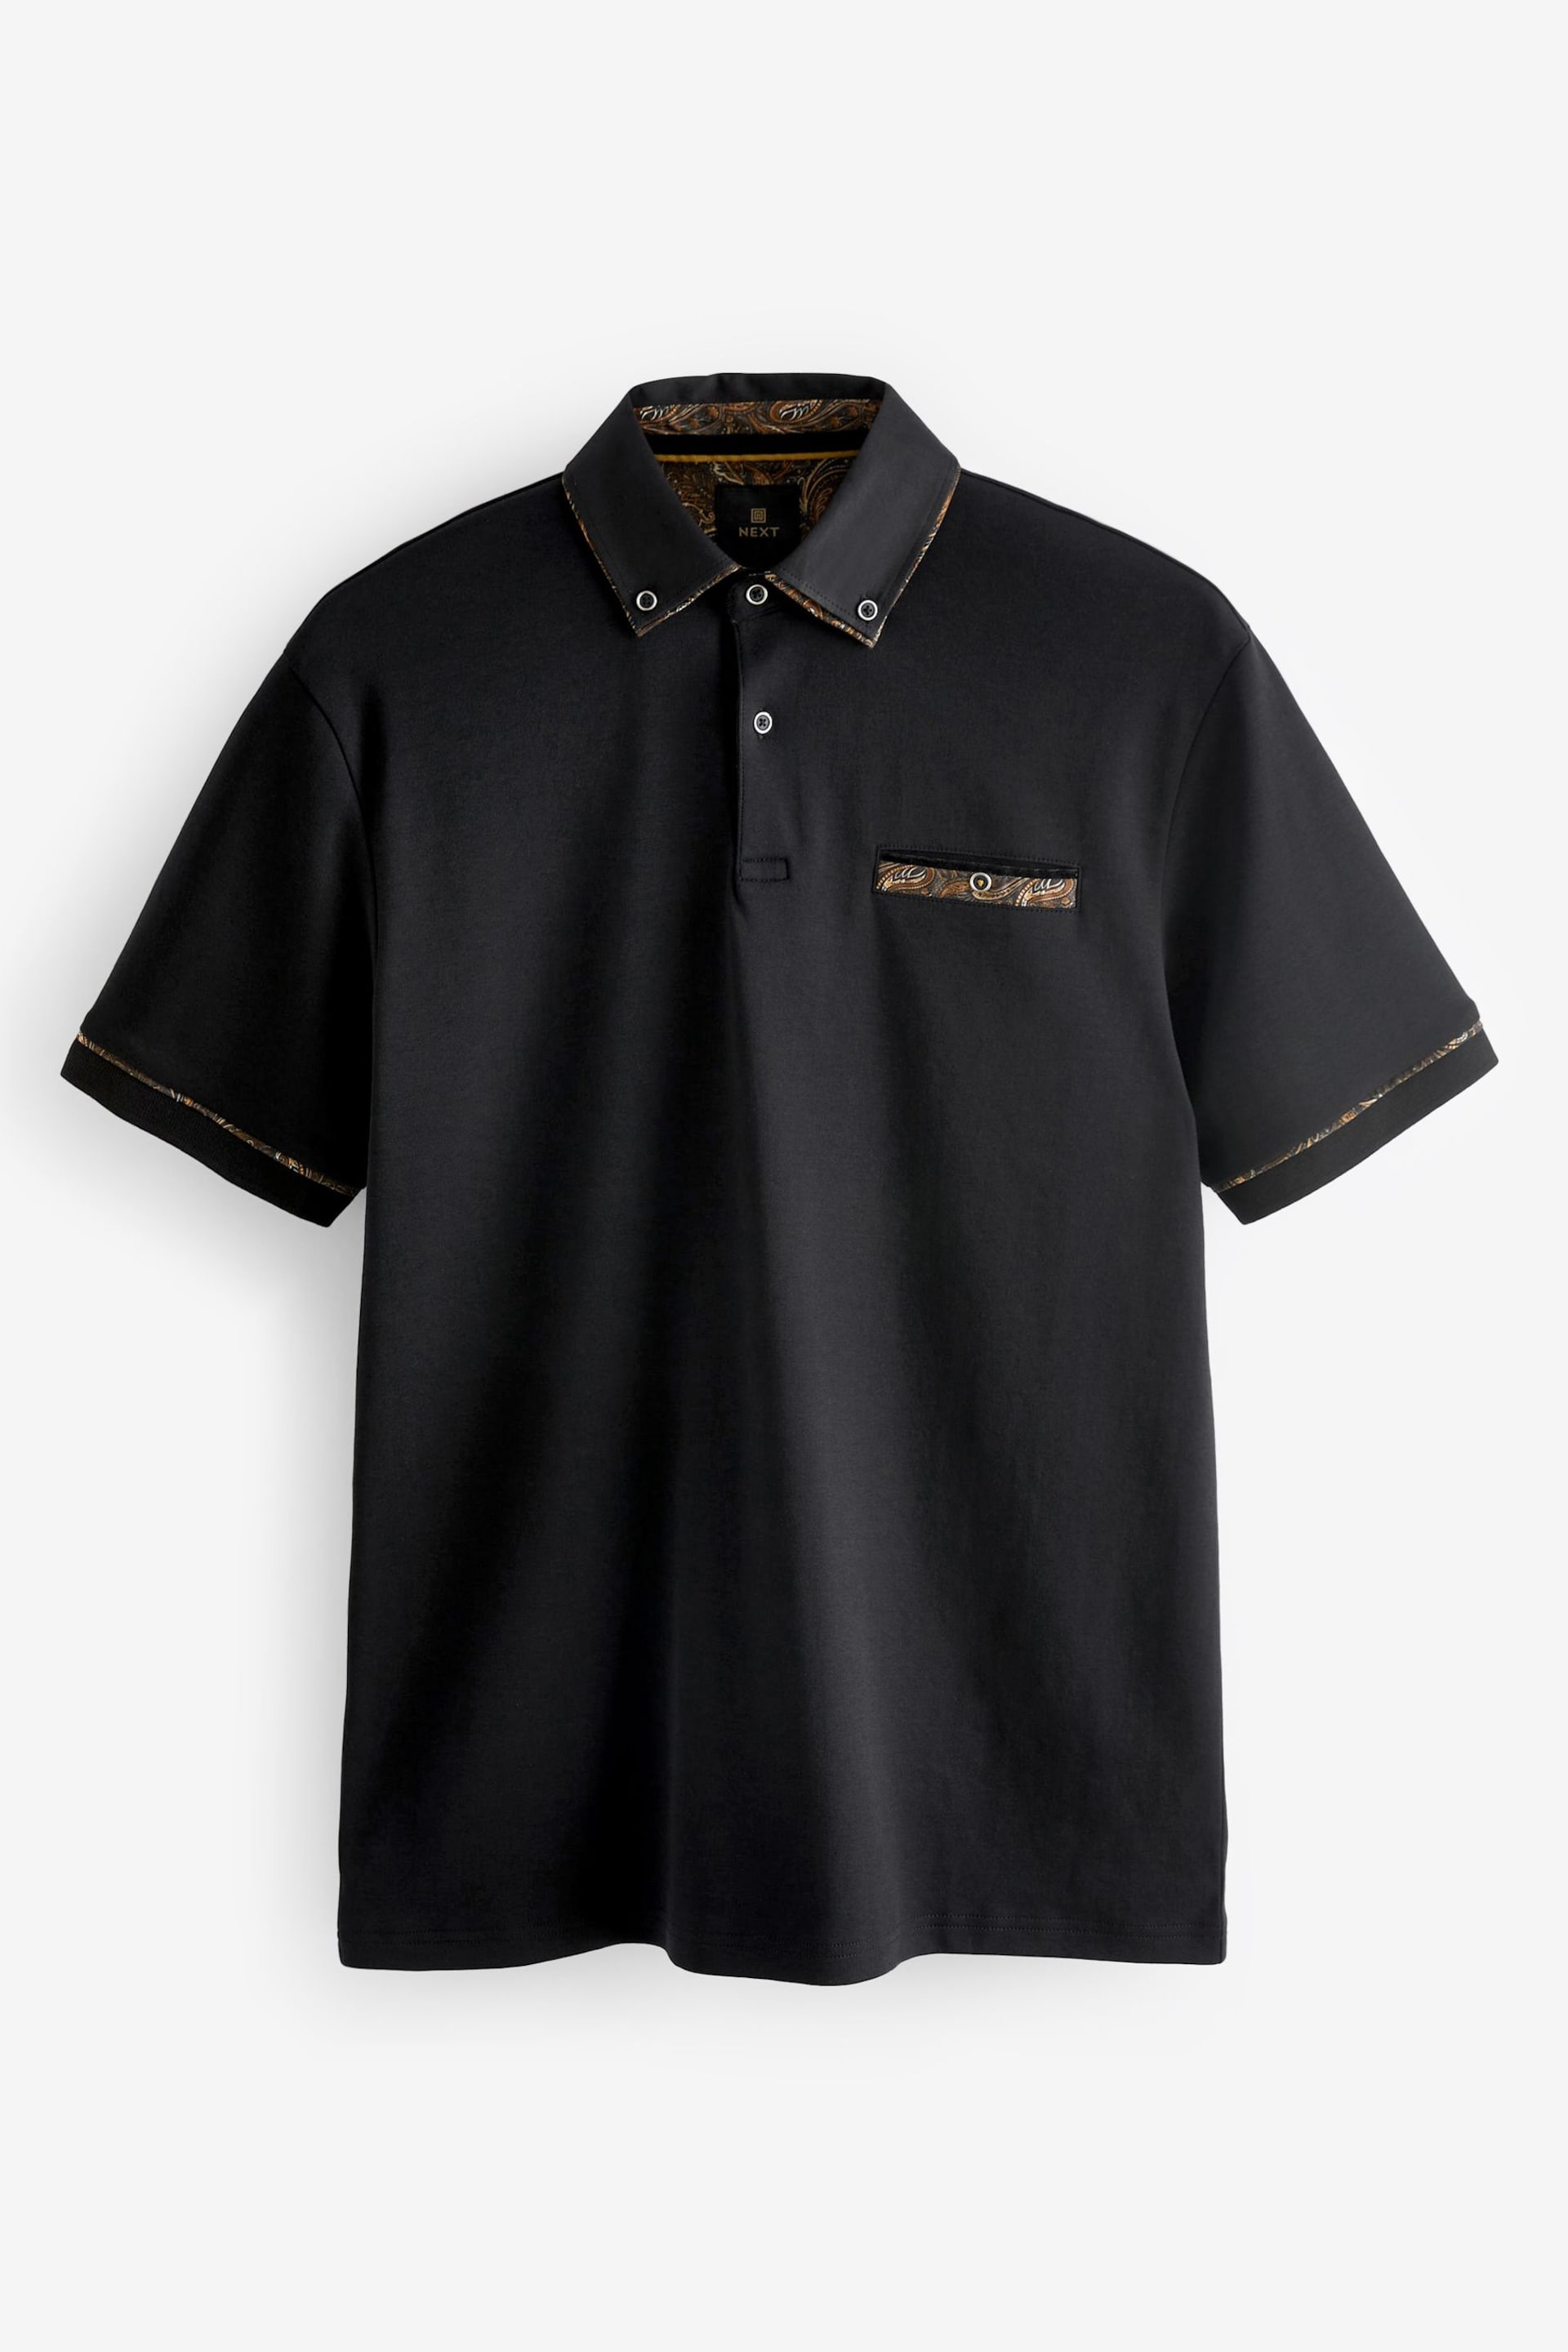 Black/Gold Short Sleeve Smart Collar Polo Shirt - Image 7 of 9